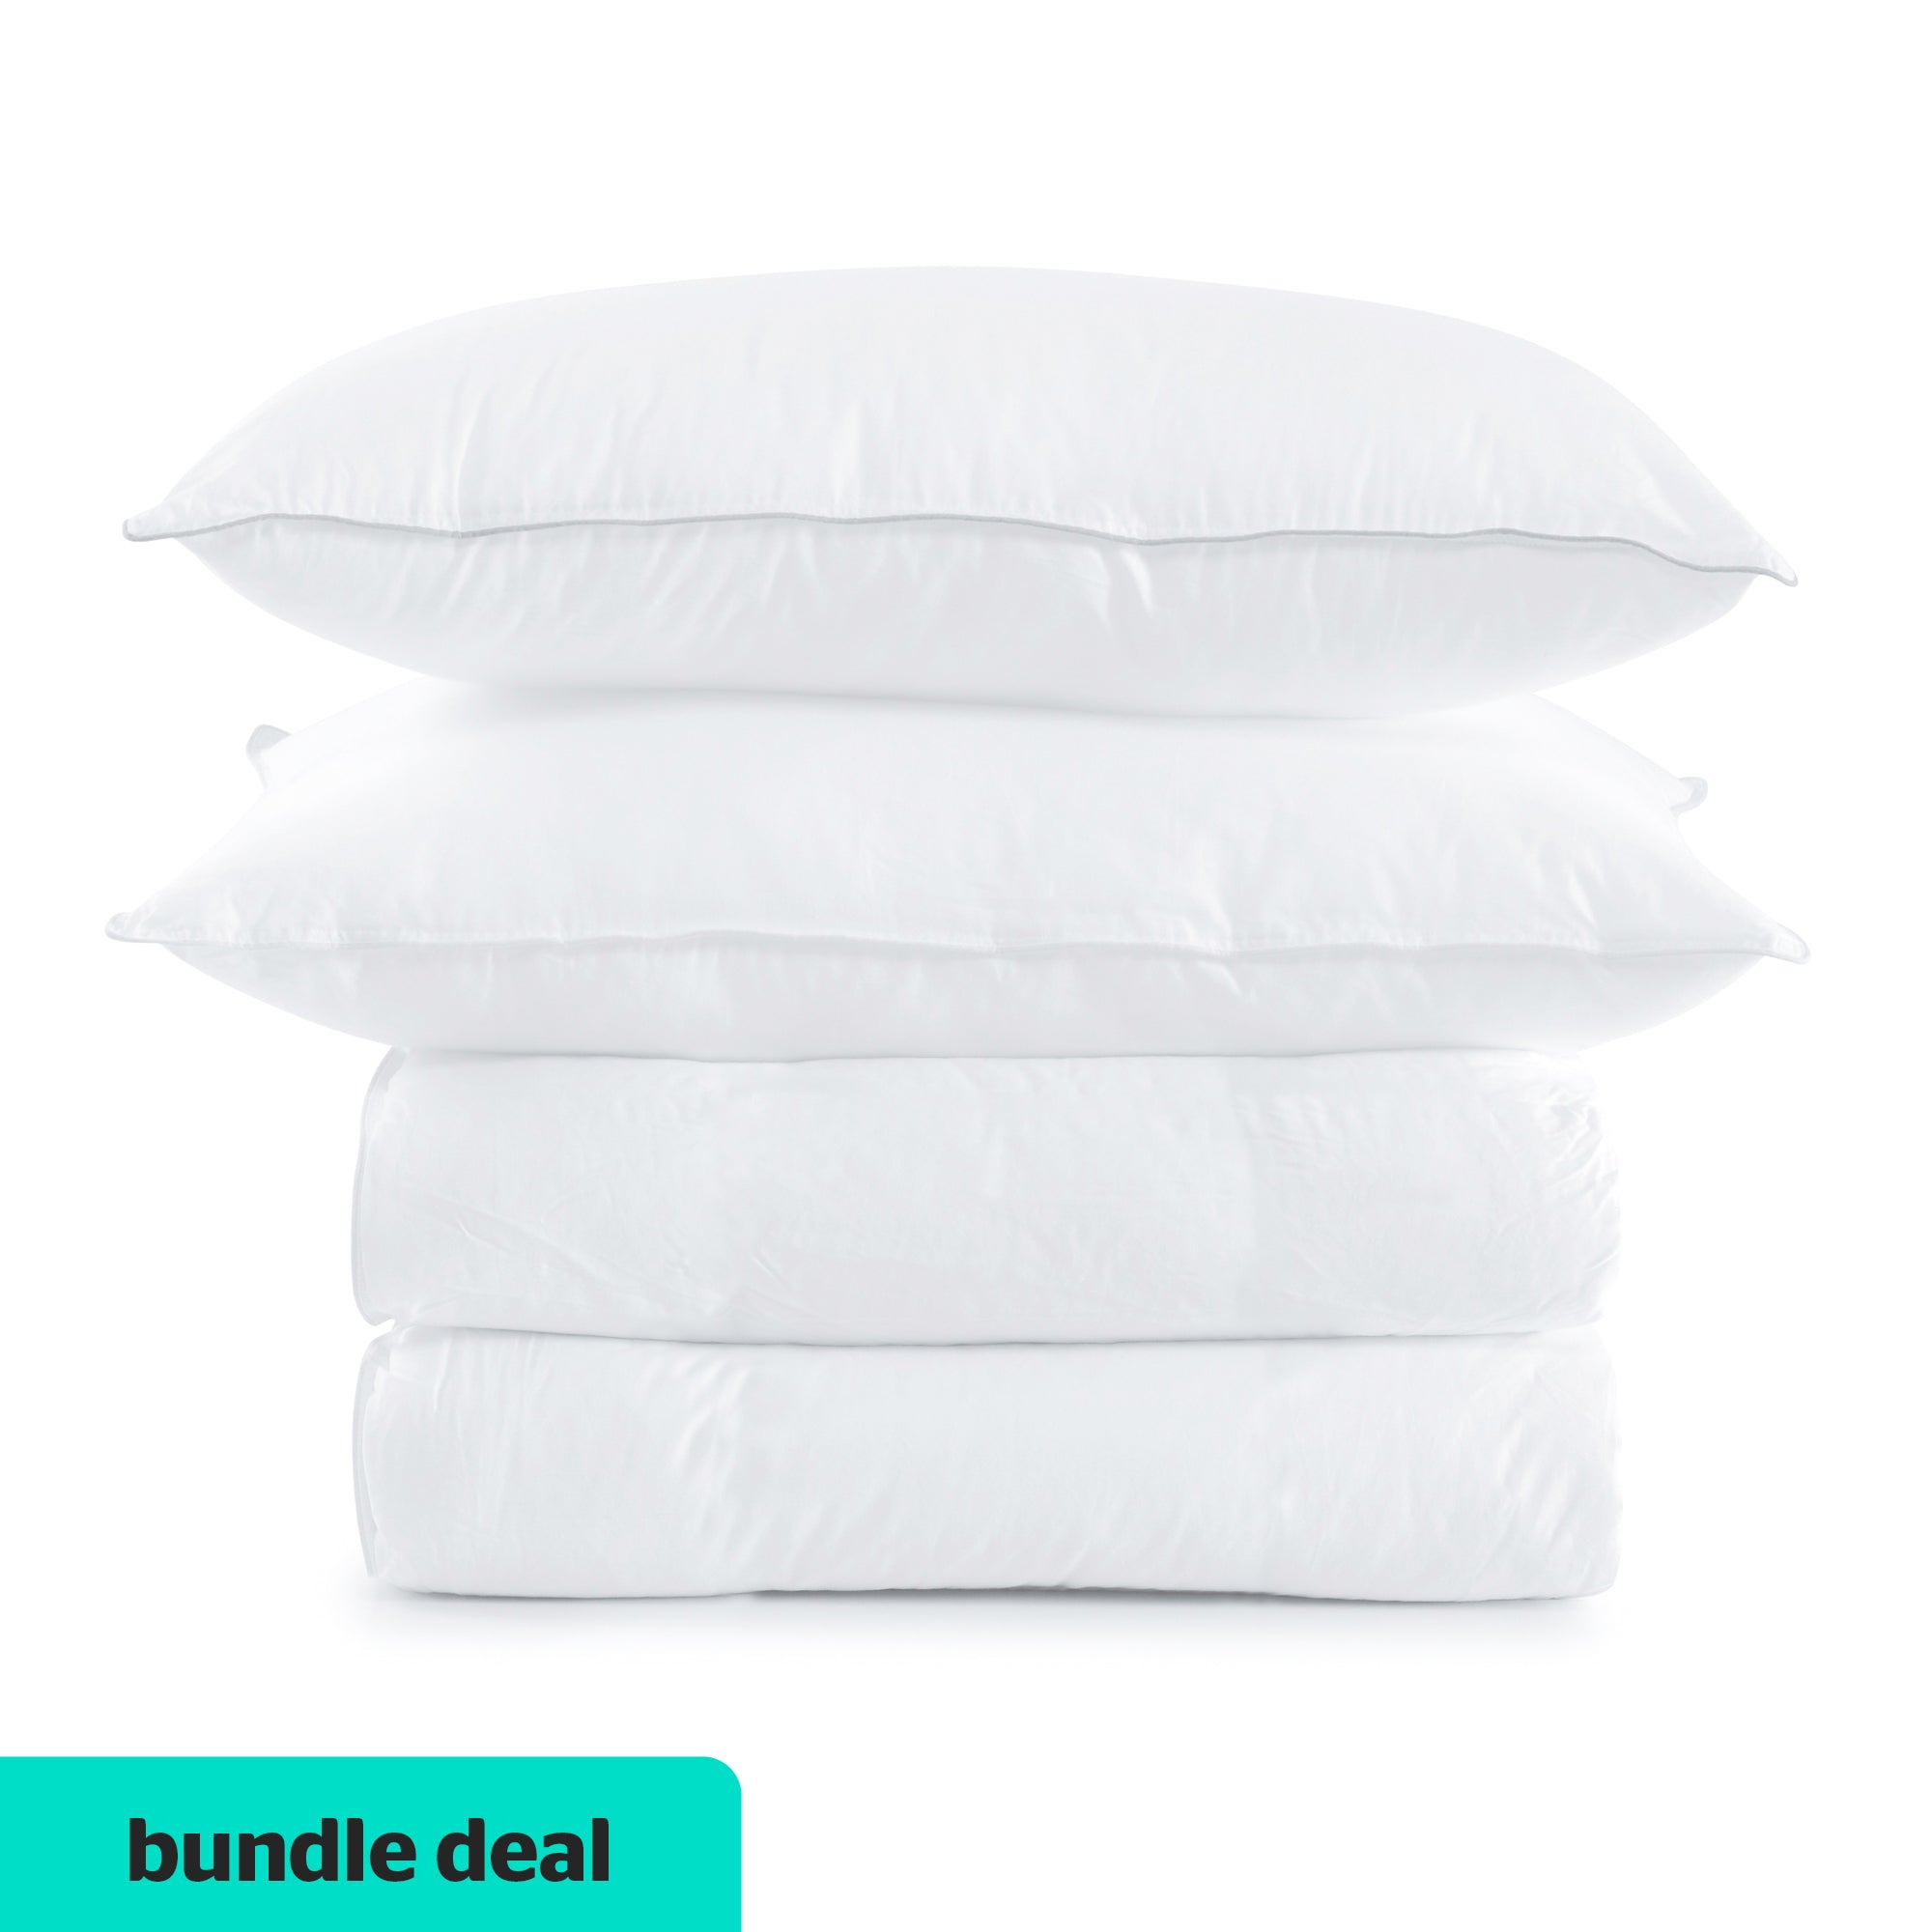 Essential Summer Duvet + Hollow Fibre Pillow Value Set